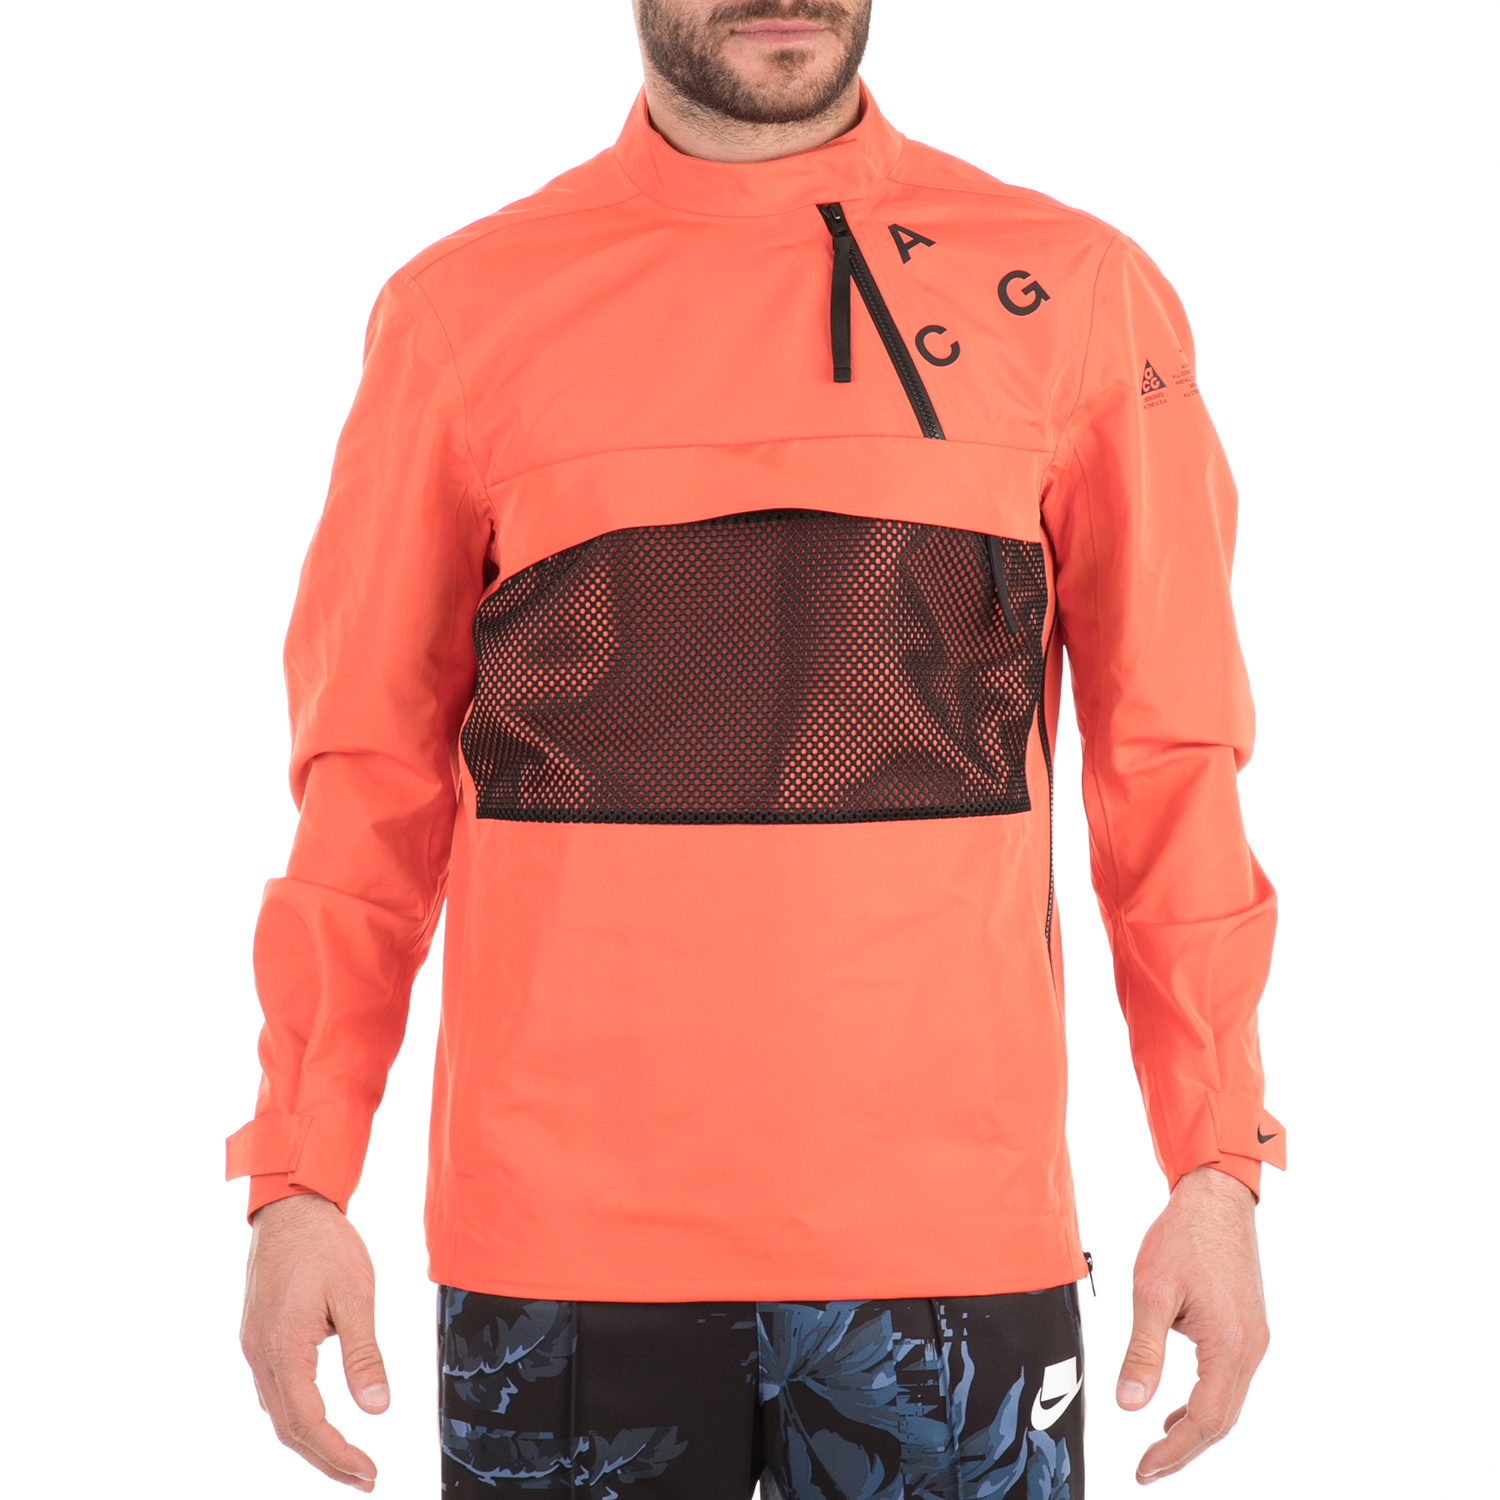 NIKE - Ανδρικό jacket NIKE NRG ACG PO SHELL πορτοκαλί Ανδρικά/Ρούχα/Πανωφόρια/Τζάκετς